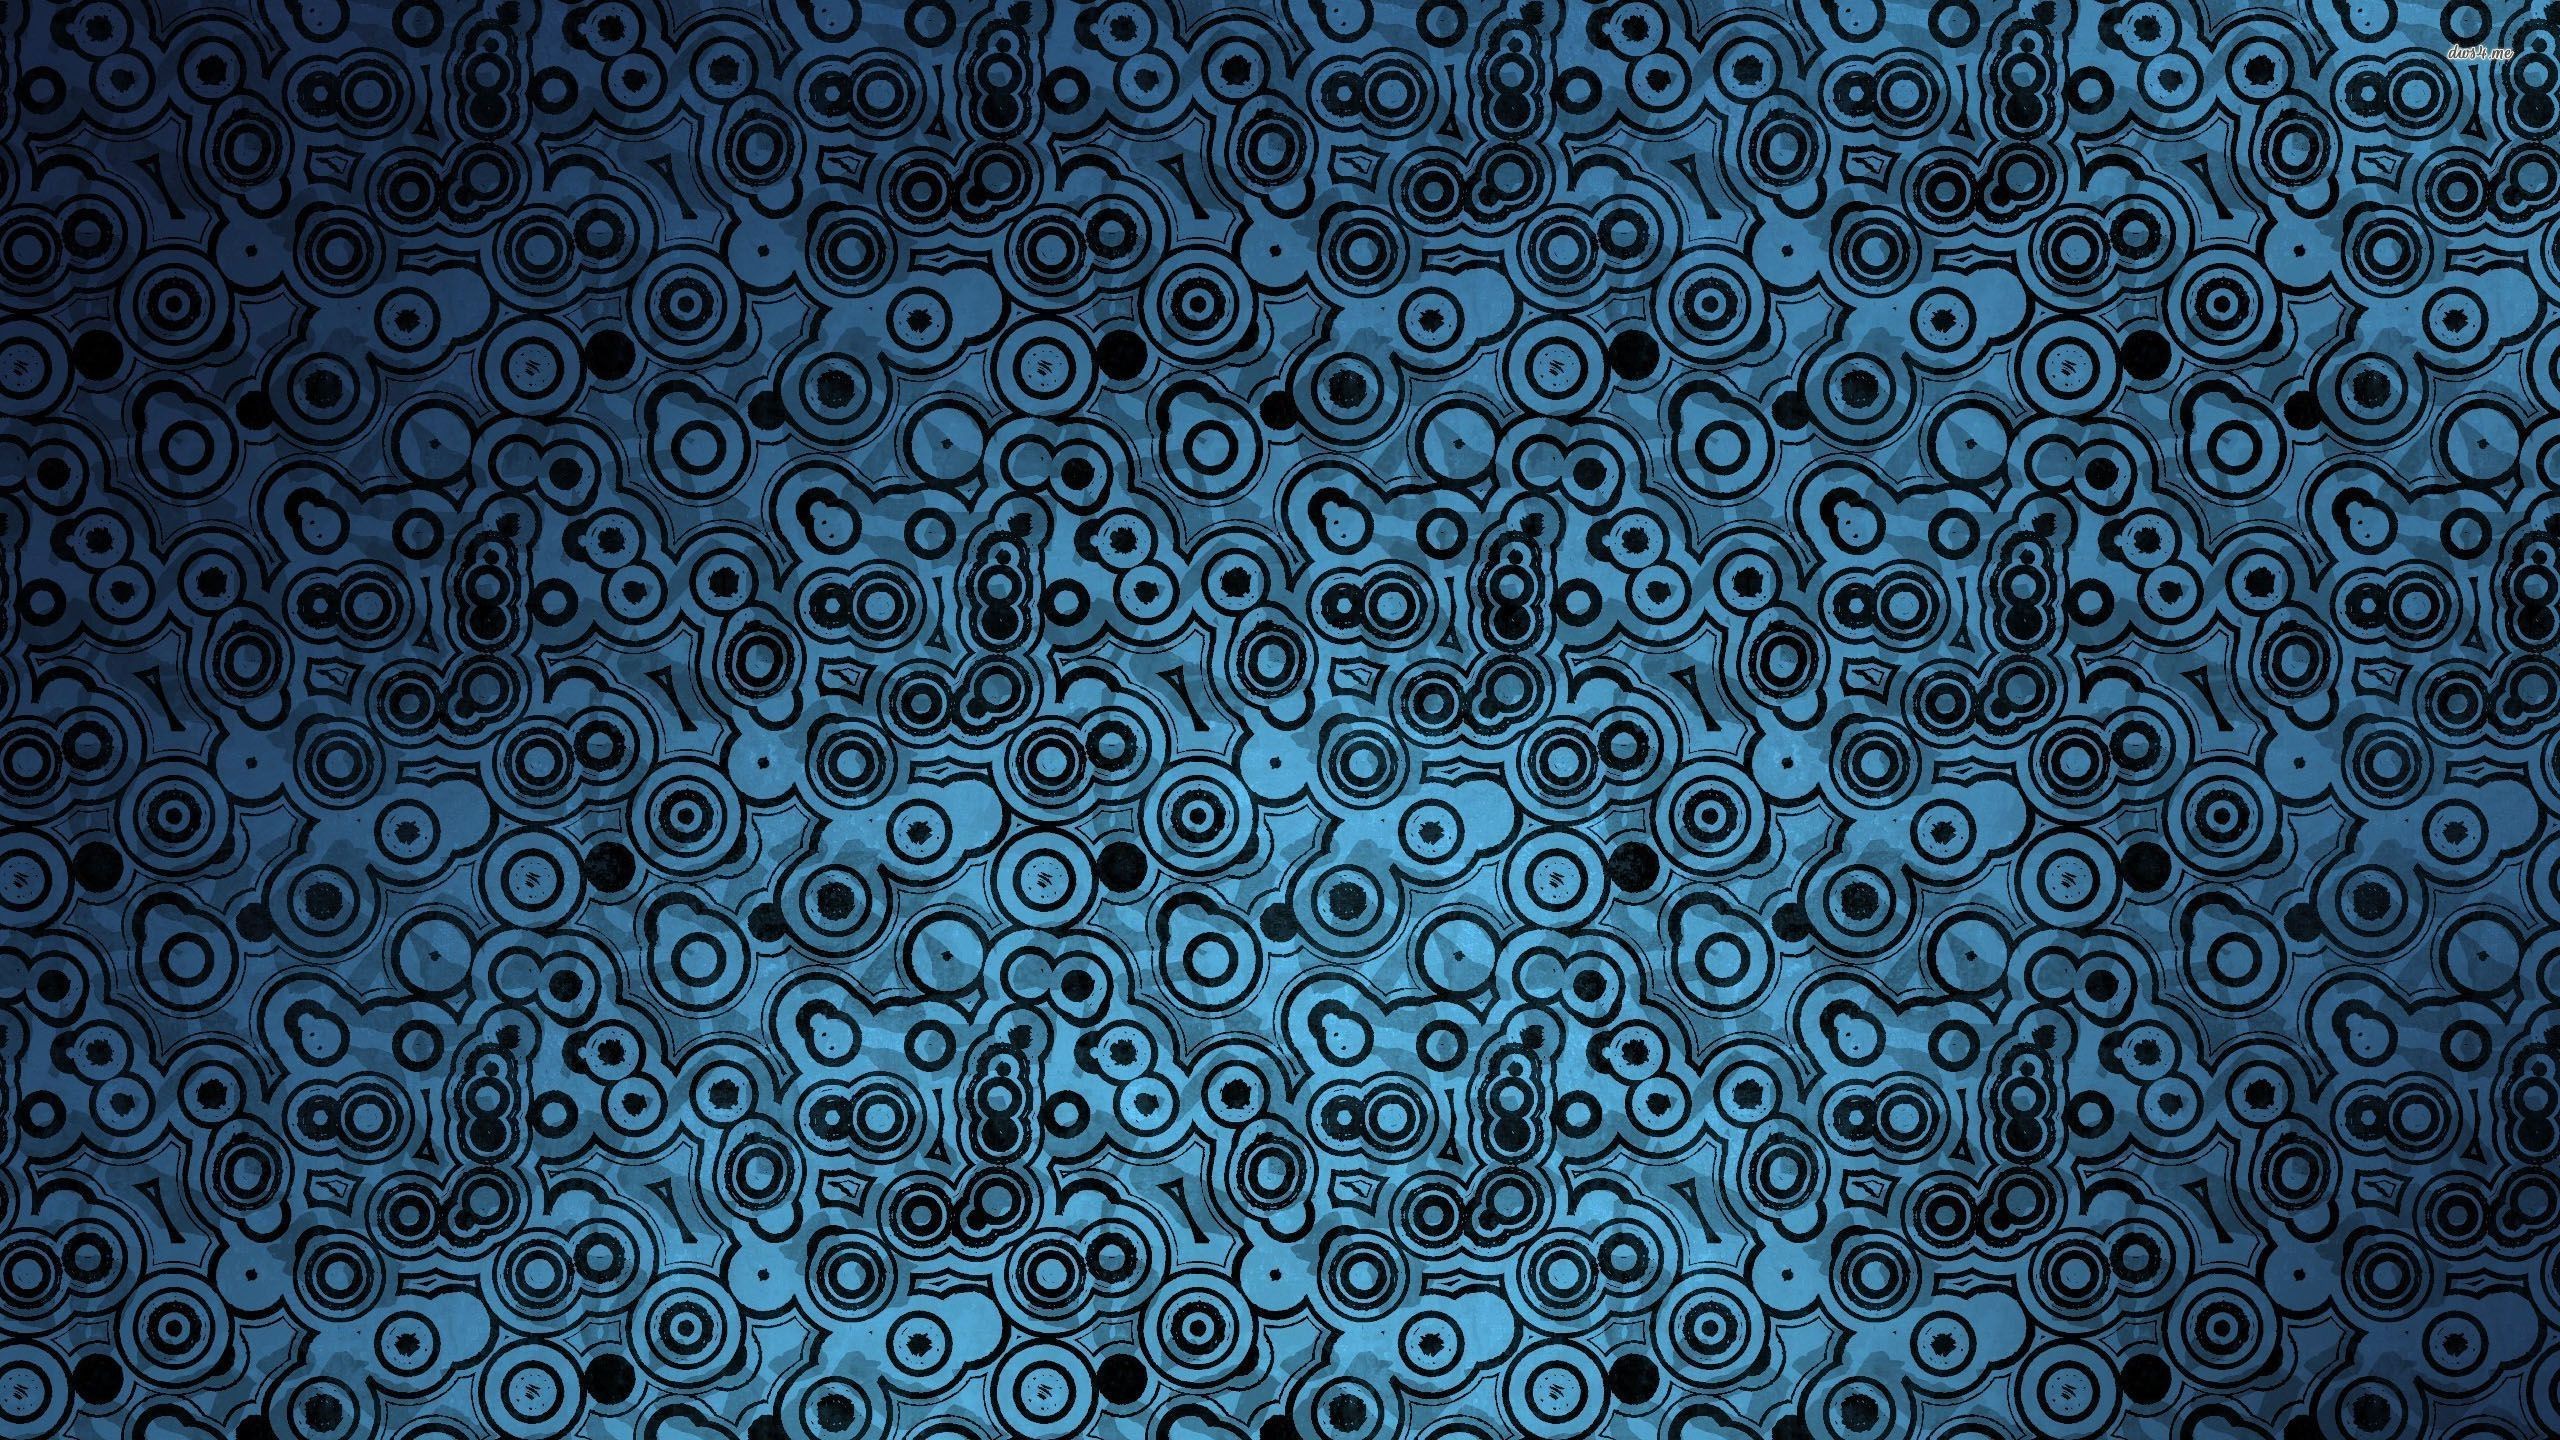 General 2560x1440 digital art pattern blue background minimalism circle black blue